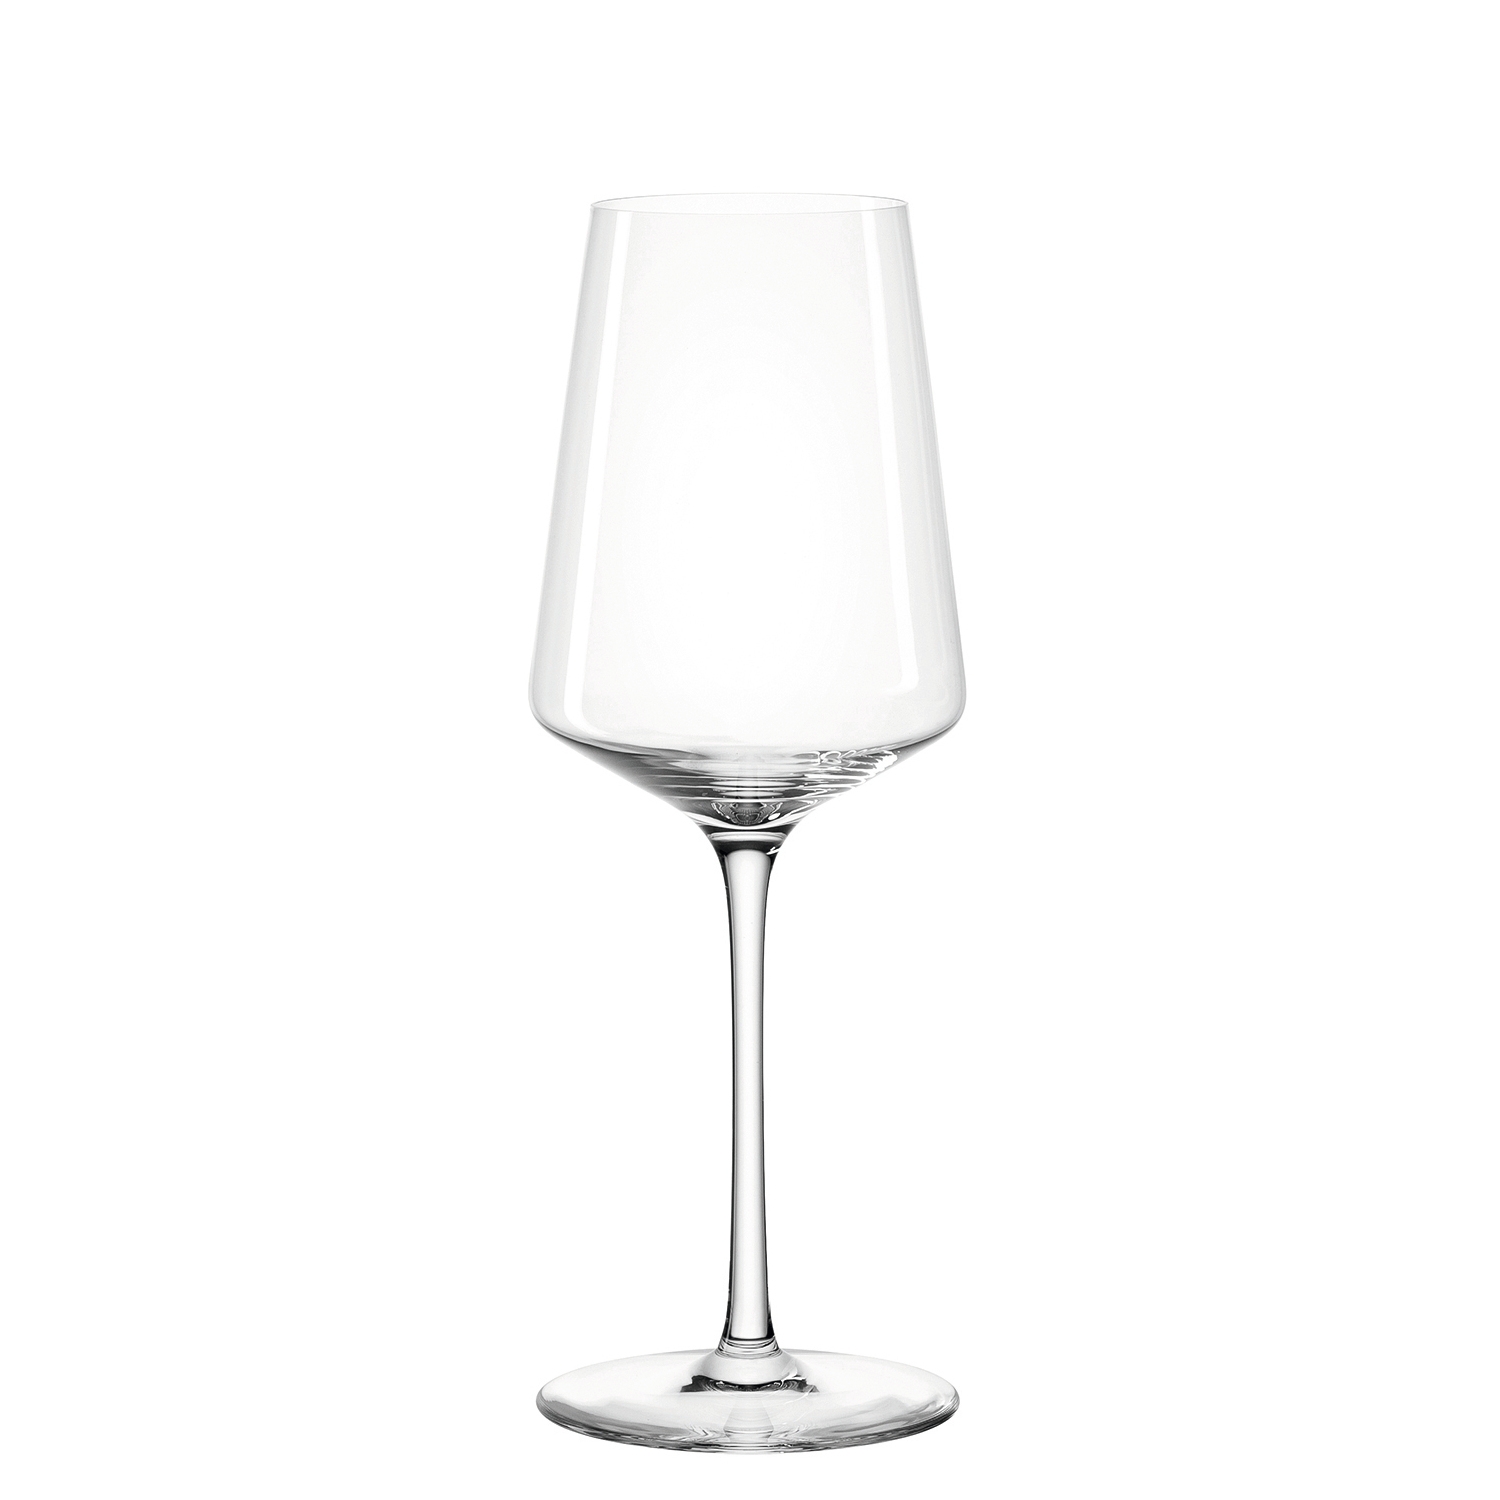  Rieslingglas   Puccini    Maße: 23 x 8,2 x 8,2 cm (HxBxT) Durchmesser: 6 cm, 220 ml Nutzinhalt 